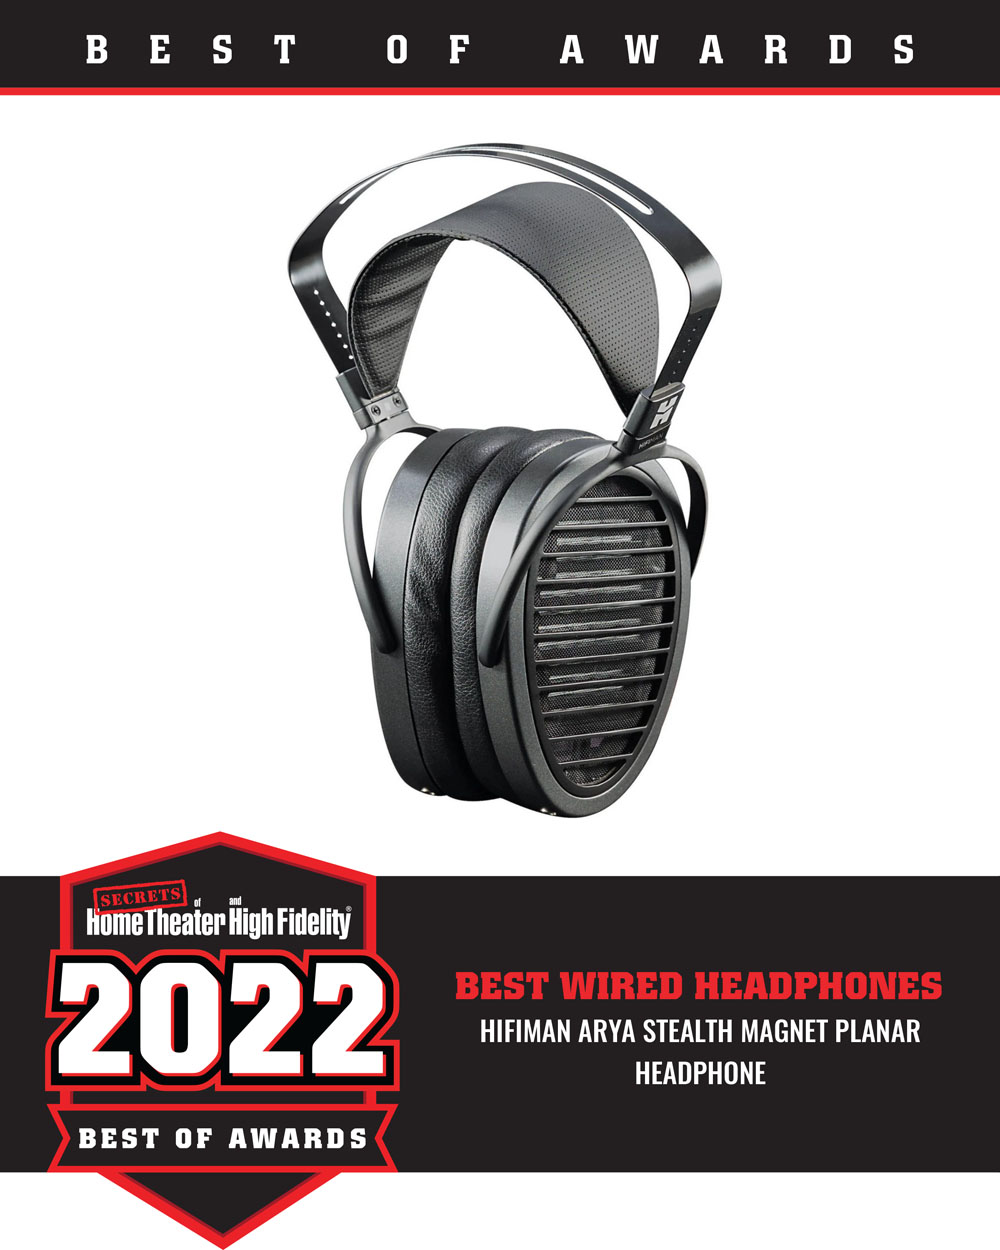 HIFIMAN Arya Stealth Magnet Planar Headphone Best of 2022 Award